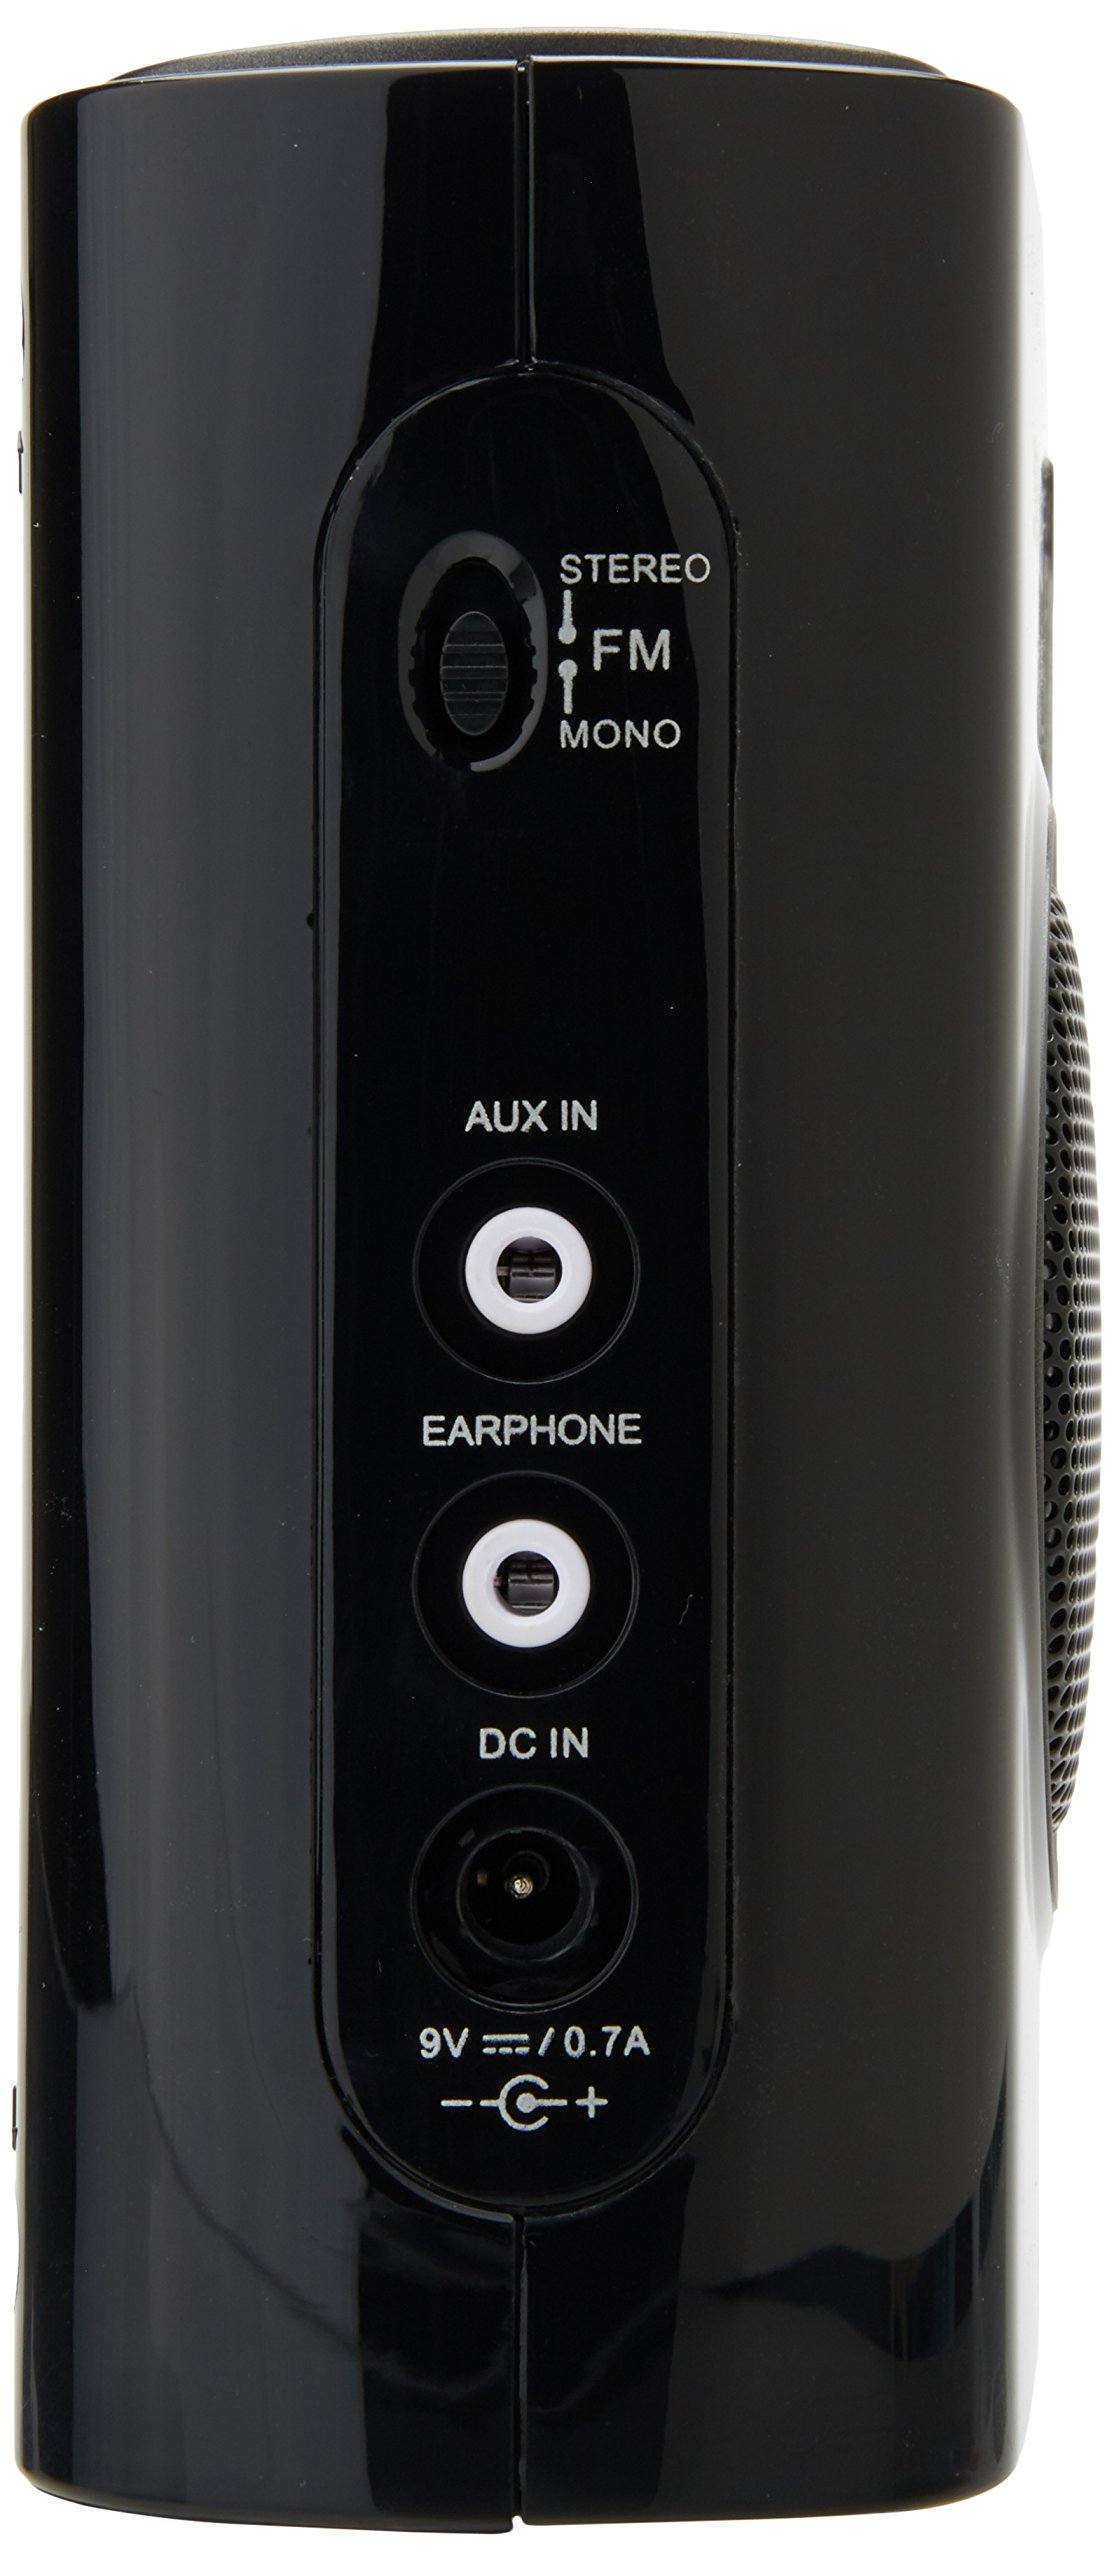 Sangean PR-D5BK AM/FM Portable Radio with Digital Tuning and RDS (Black)